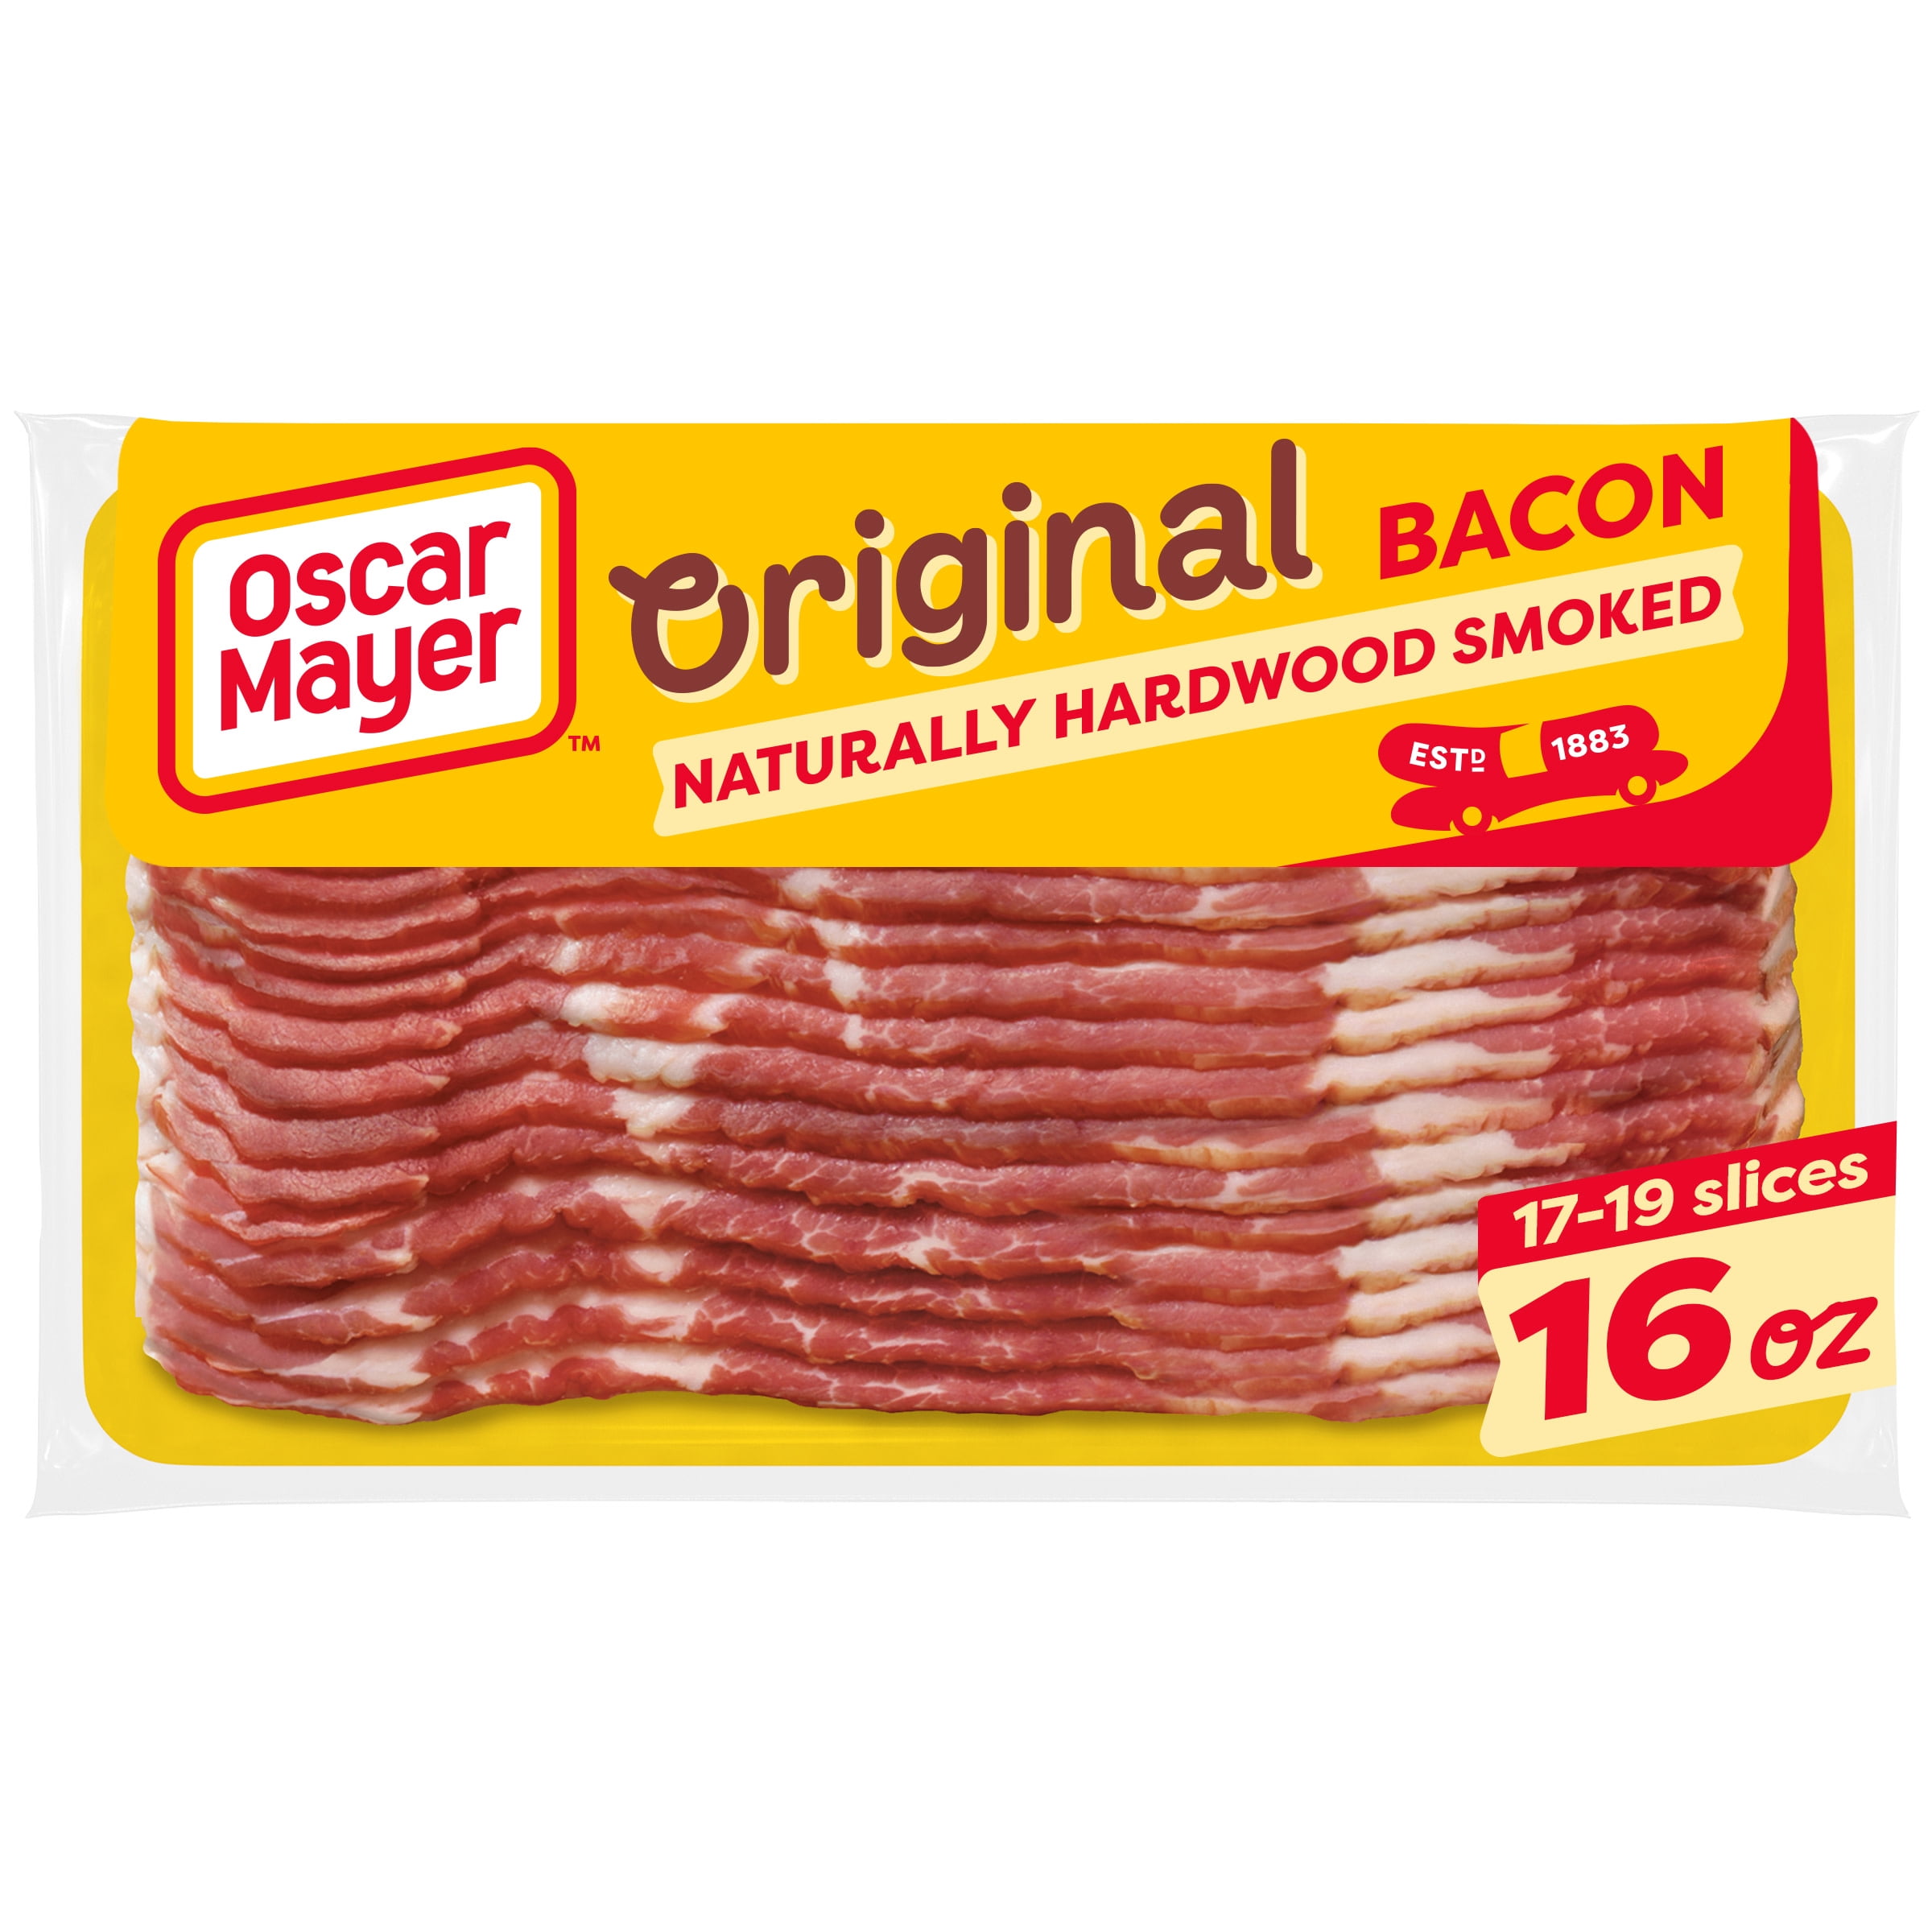 Oscar Mayer Naturally Hardwood Smoked Bacon, 16 oz Pack, 17-19 slices -  Walmart.com